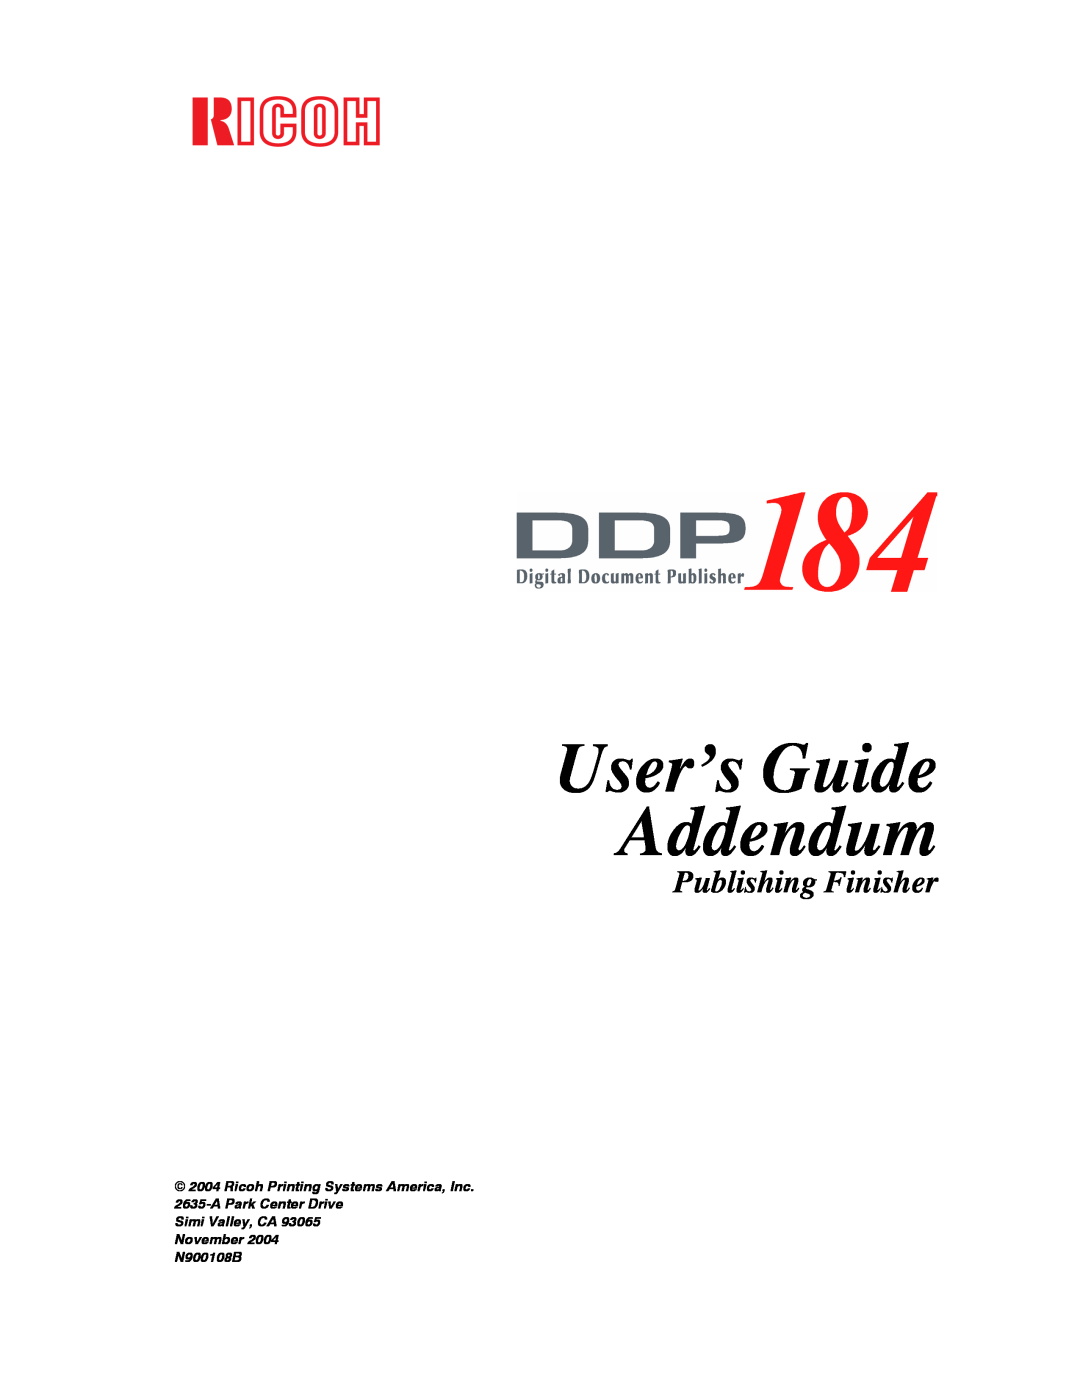 Ricoh DDP 184 manual User’s Guide Addendum, Publishing Finisher, Simi Valley, CA November N900108B 